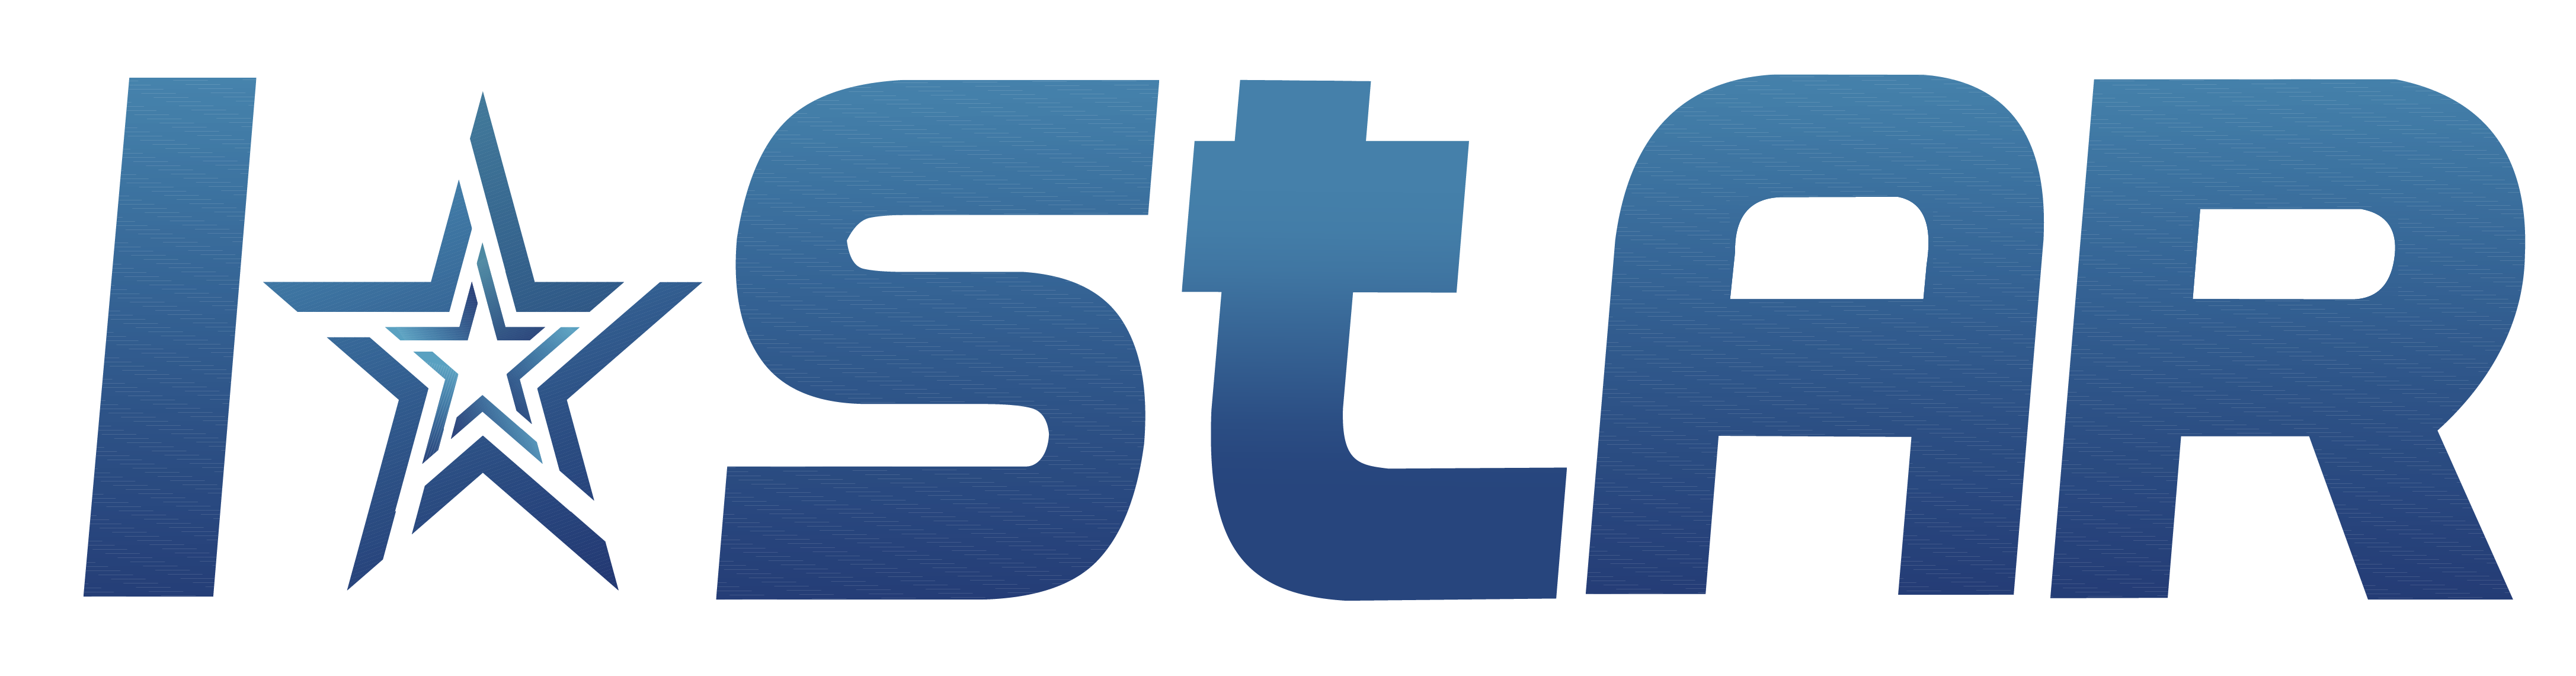 Производитель ISTAR логотип